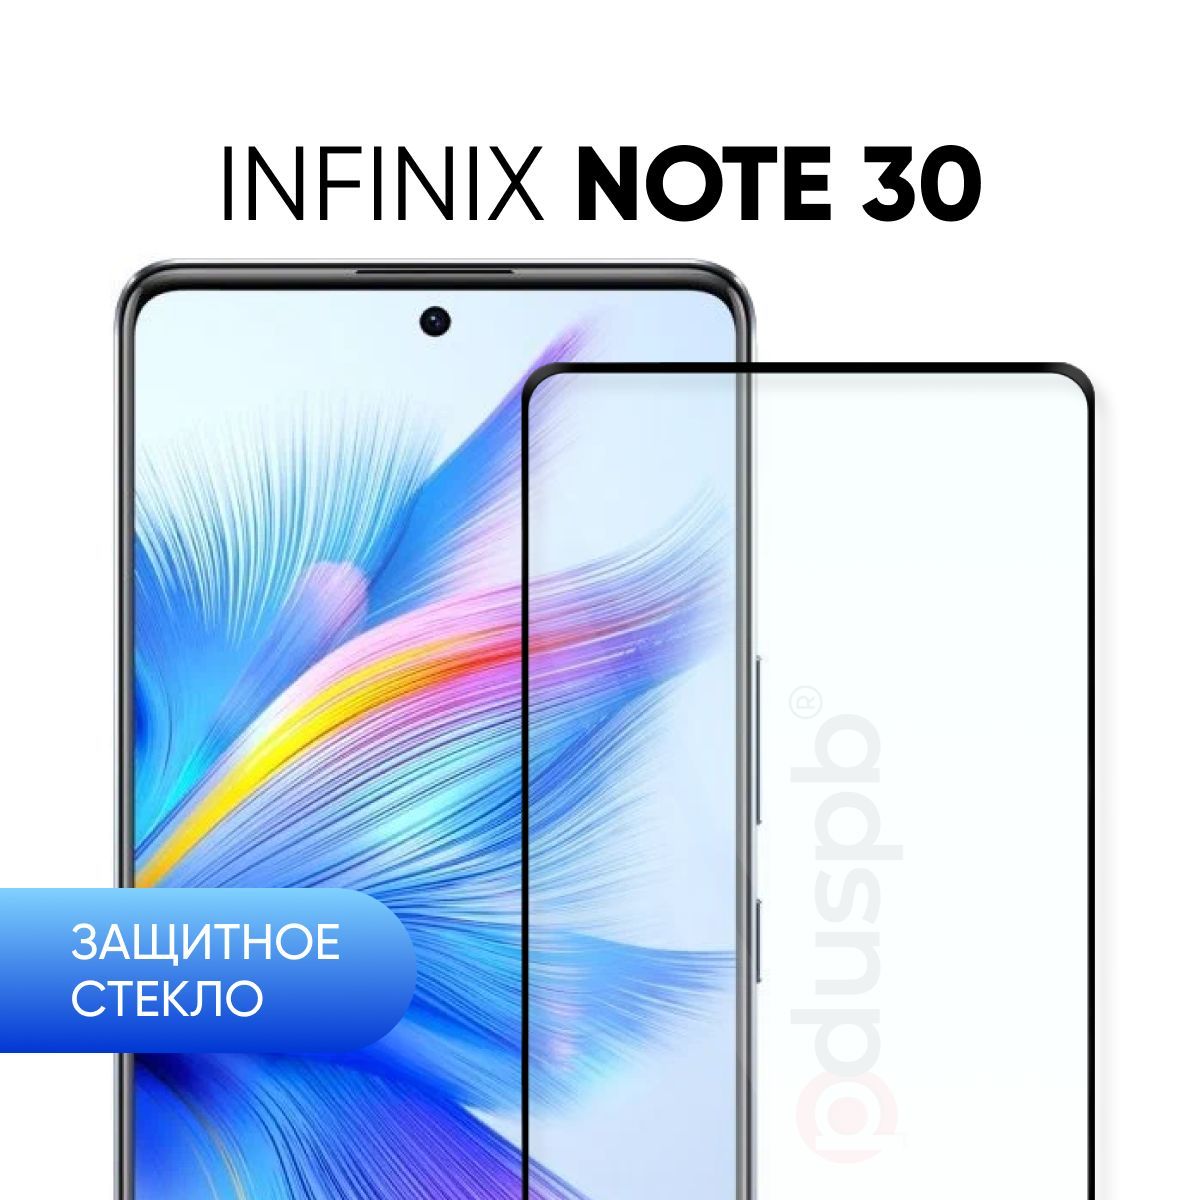 Infinix note 30 характеристики и цена. Инфиникс ноут 30. Infinix Note 30 защитное стекло. Infinix Note 30 дисплей. Смартфон Infinix Note 30i.